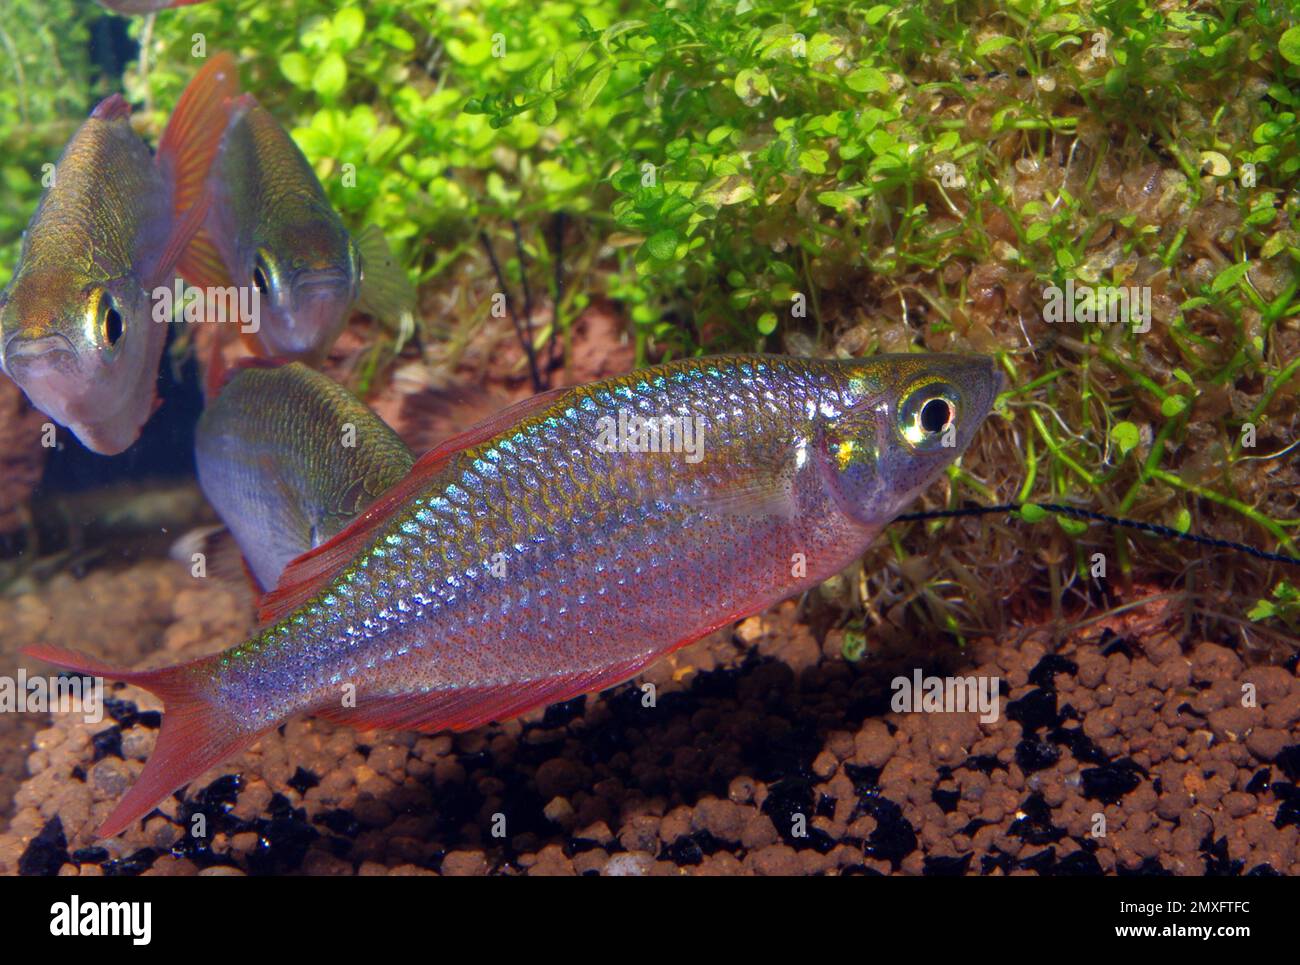 Dwarf Neon Rainbowfish (Melanotaenia praecox) Stock Photo